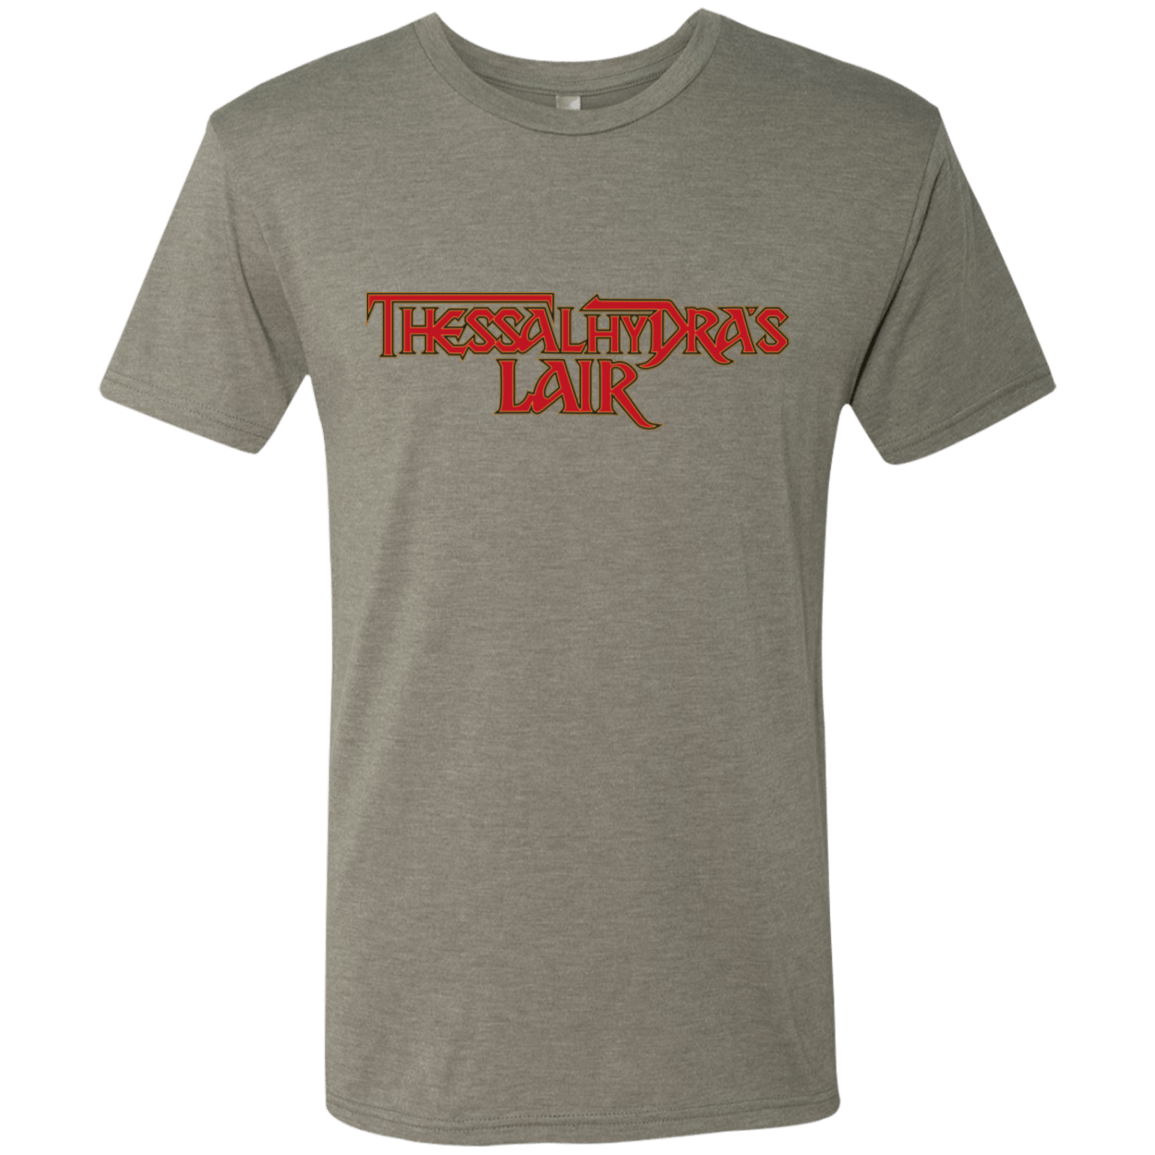 T-Shirts Venetian Grey / S Thessalhydras Lair Men's Triblend T-Shirt